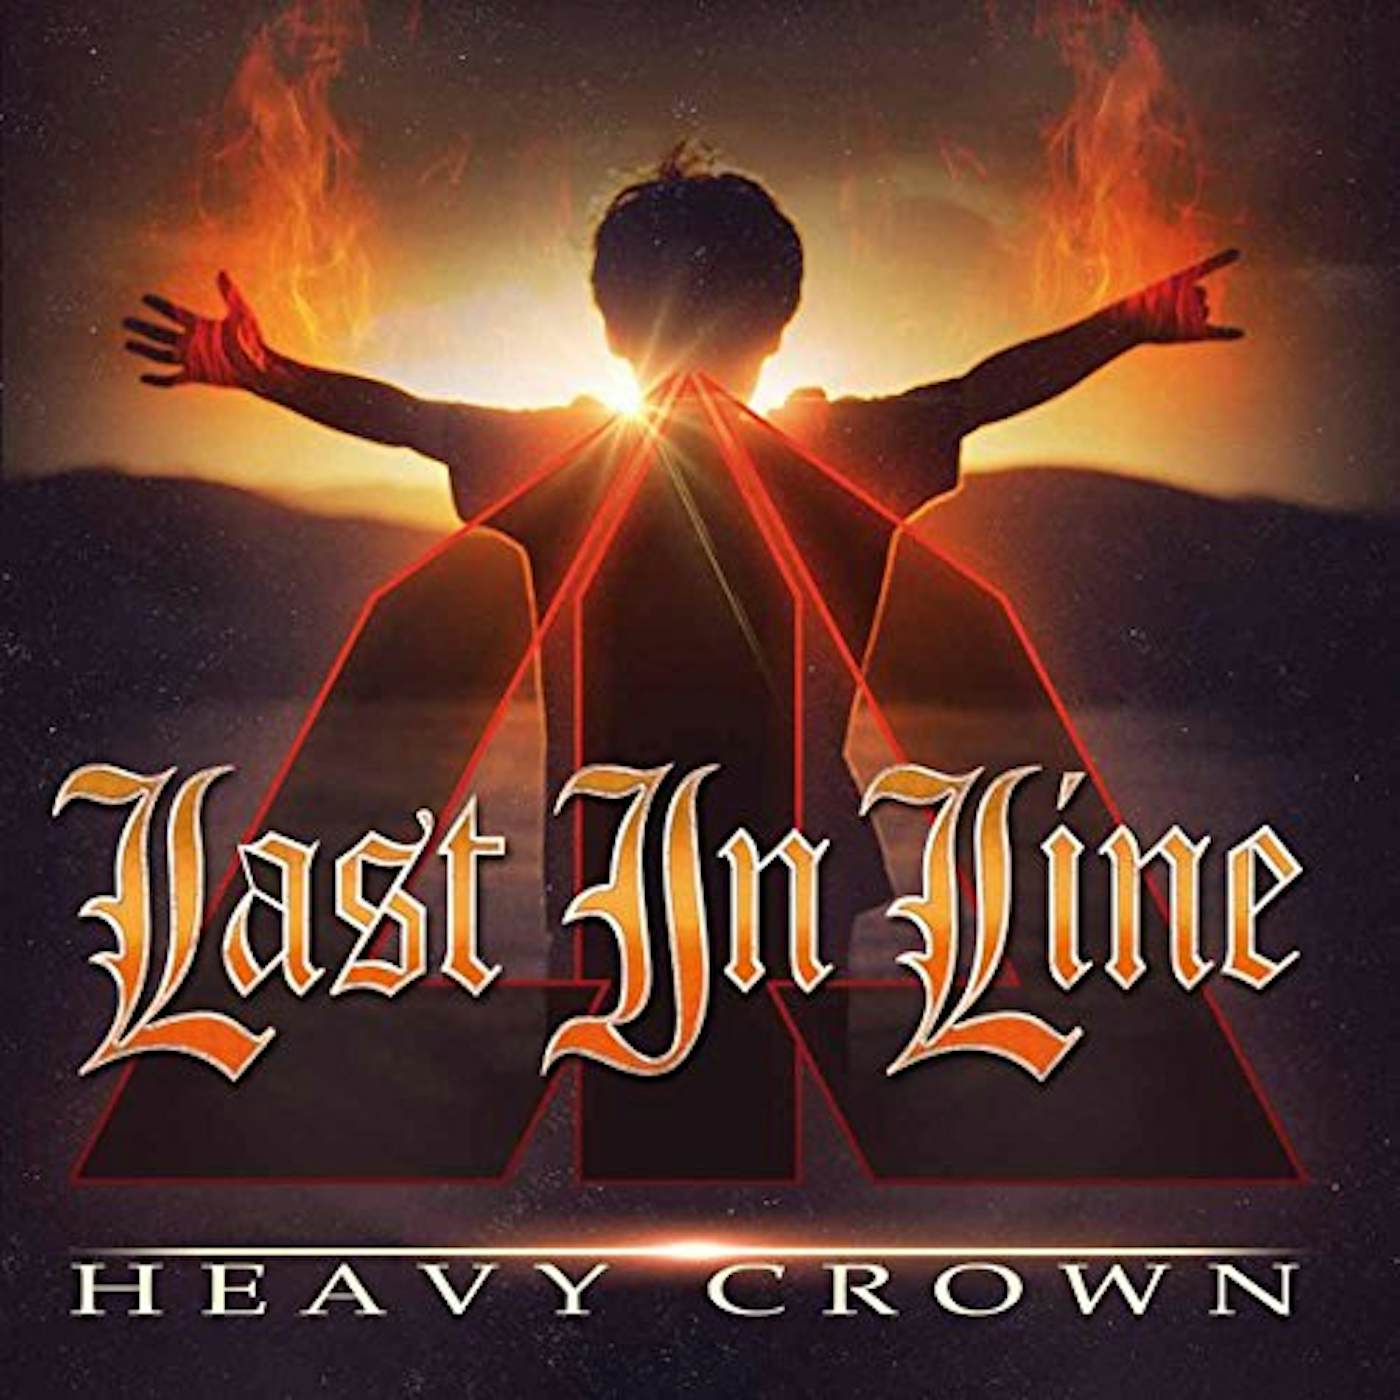 Last in Line Heavy Crown Vinyl Record